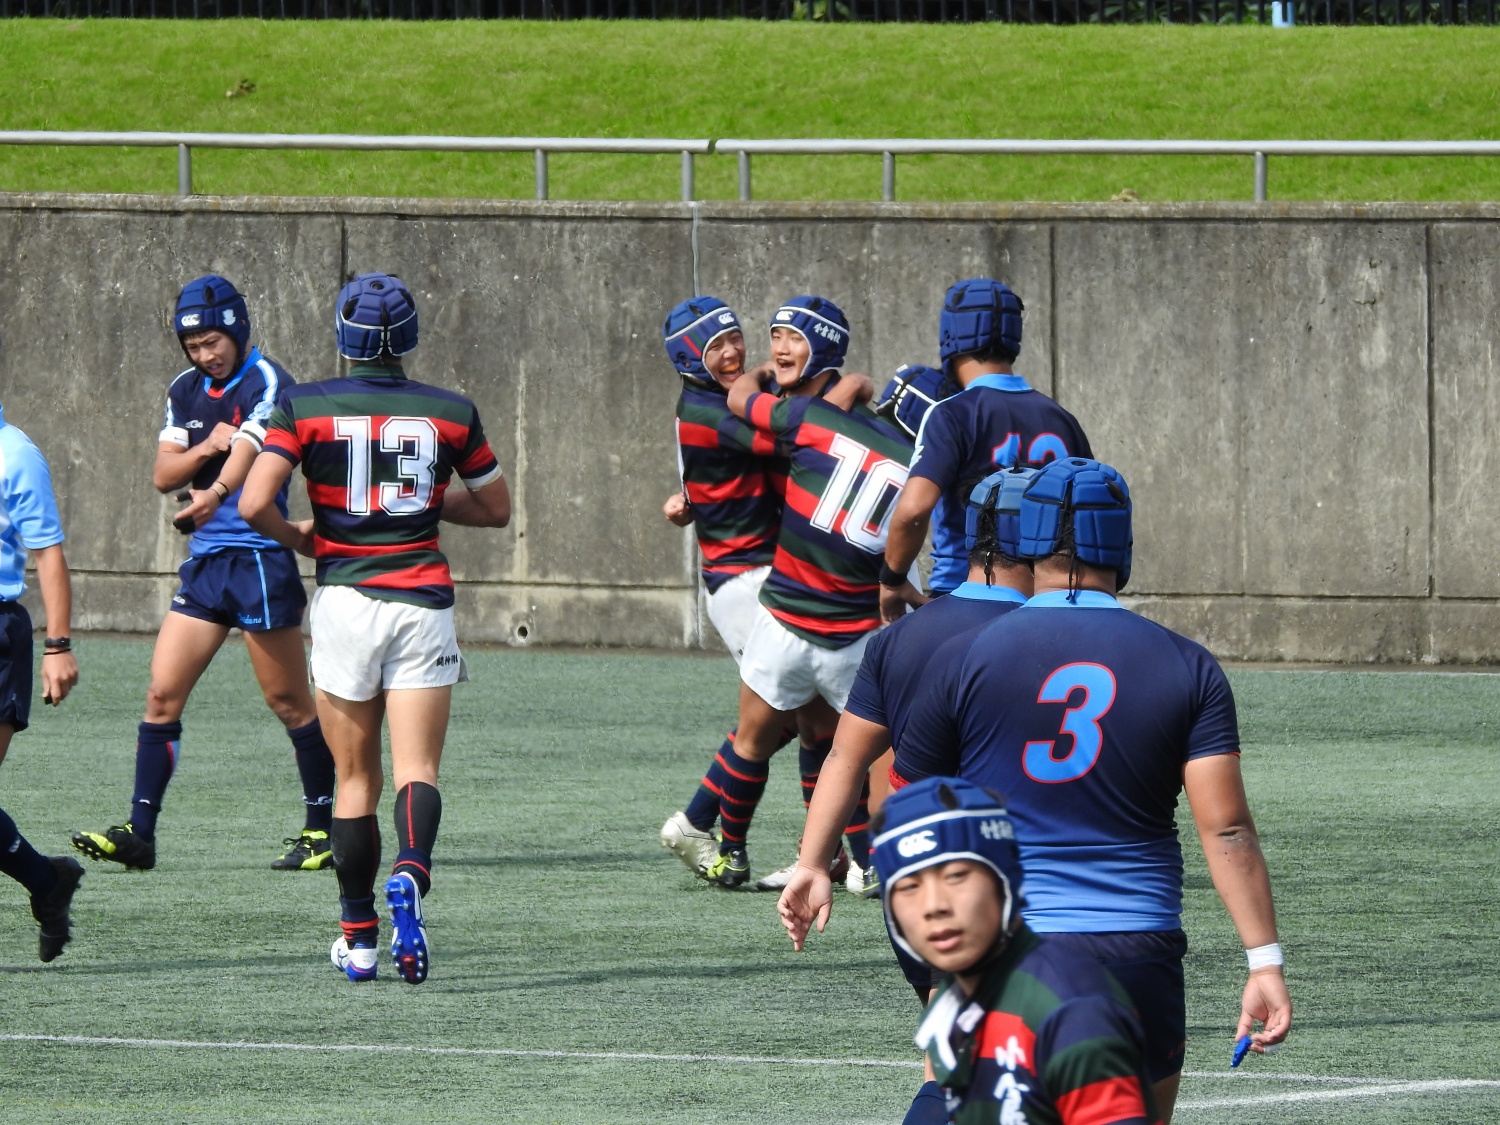 http://kokura-rugby.sakura.ne.jp/DSCN8182_xlarge.JPG